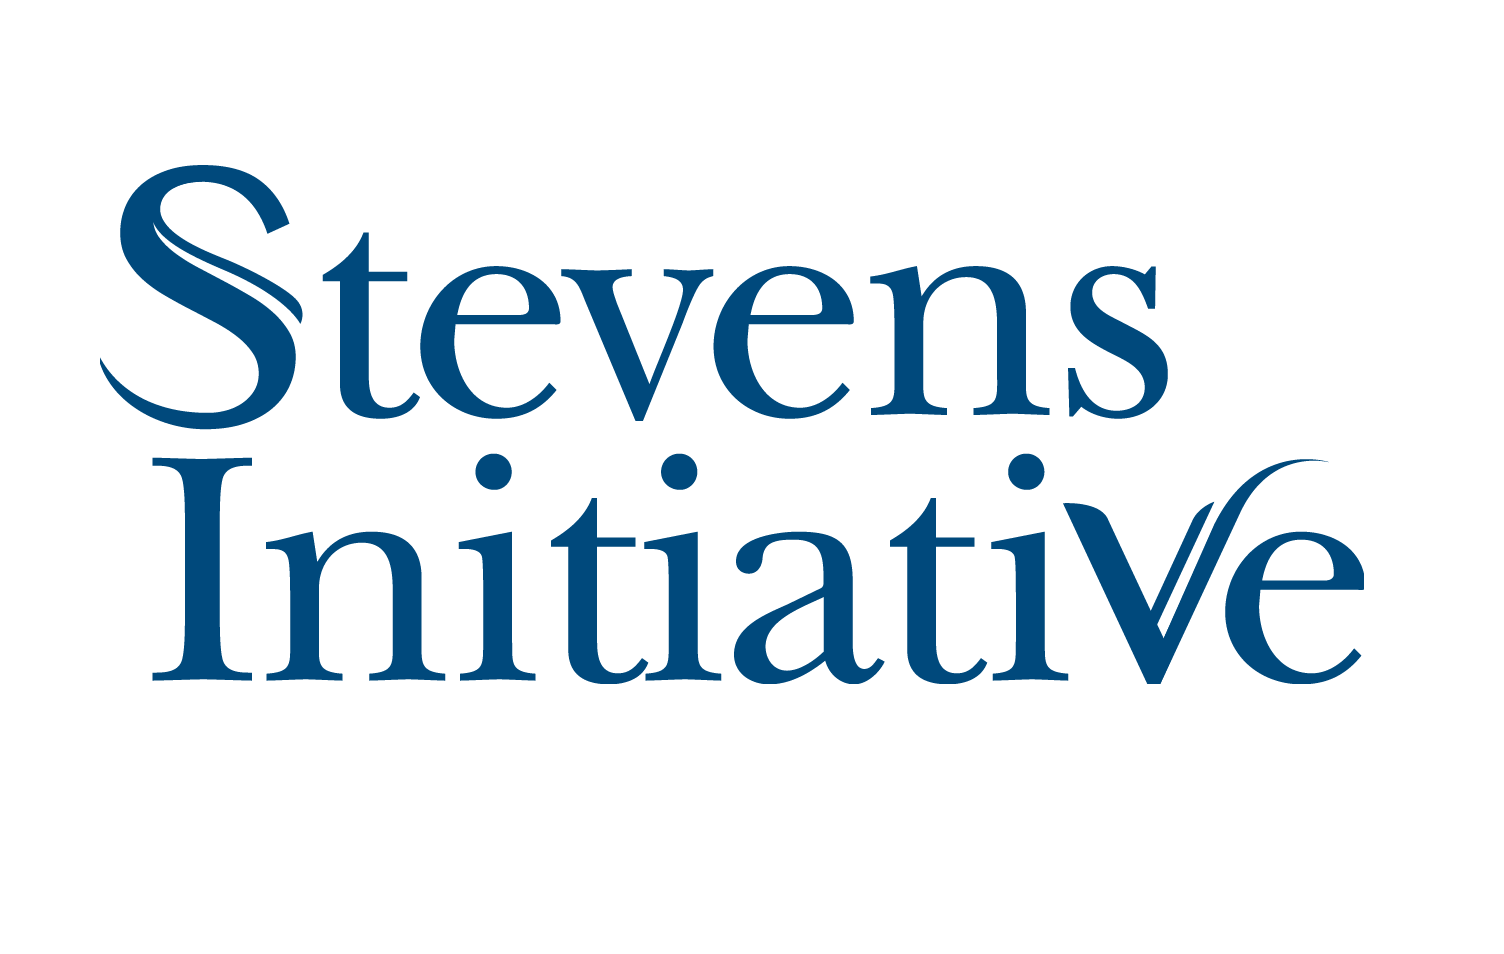 Stevens Initiative logo